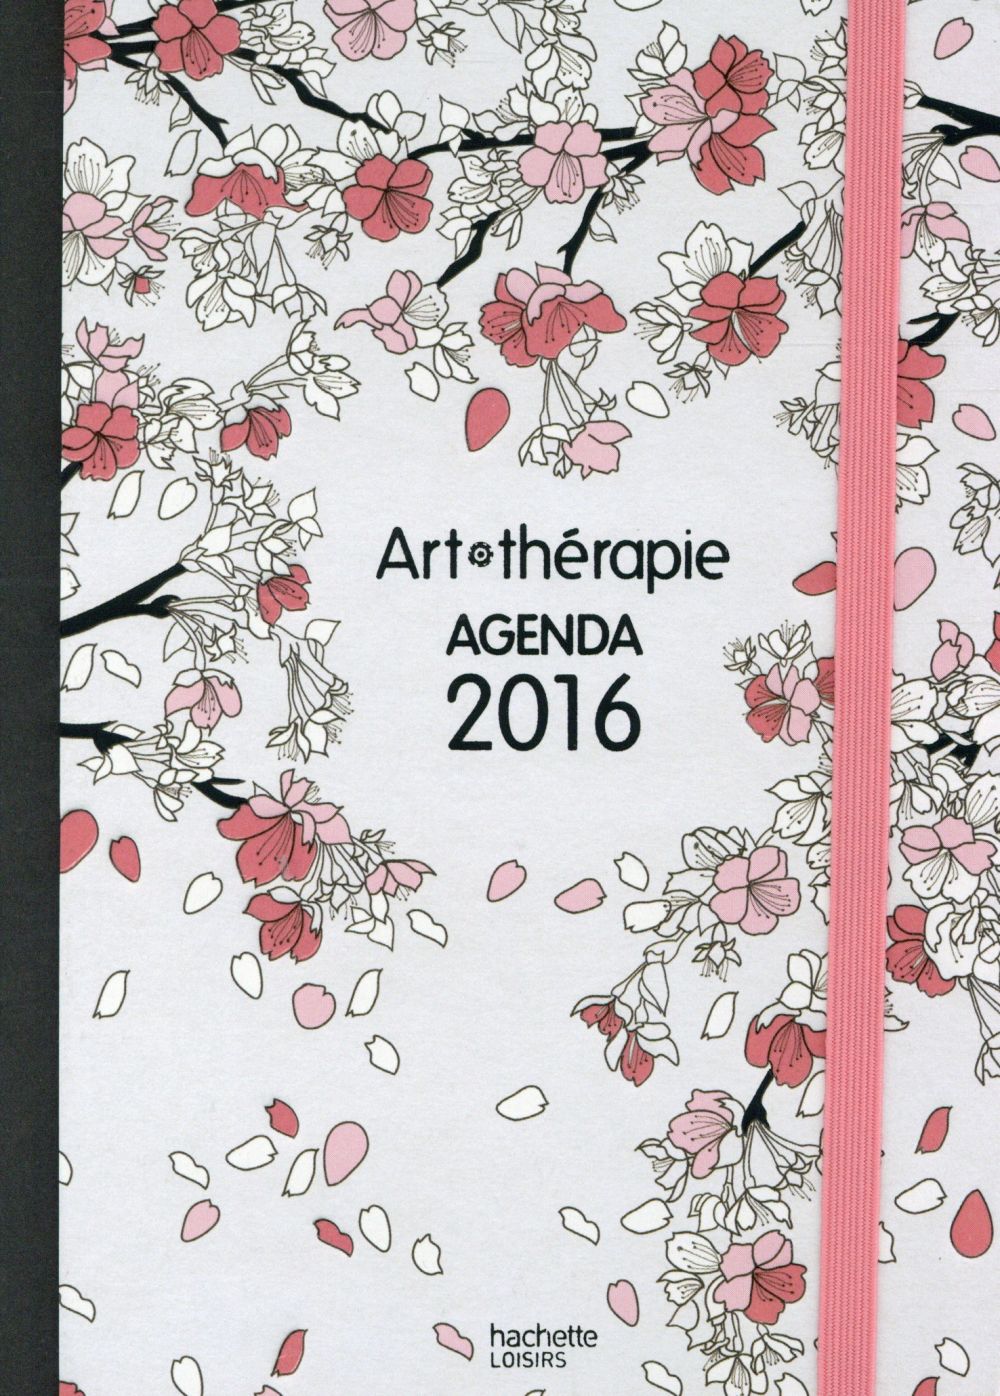 AGENDA ART-THERAPIE 2016